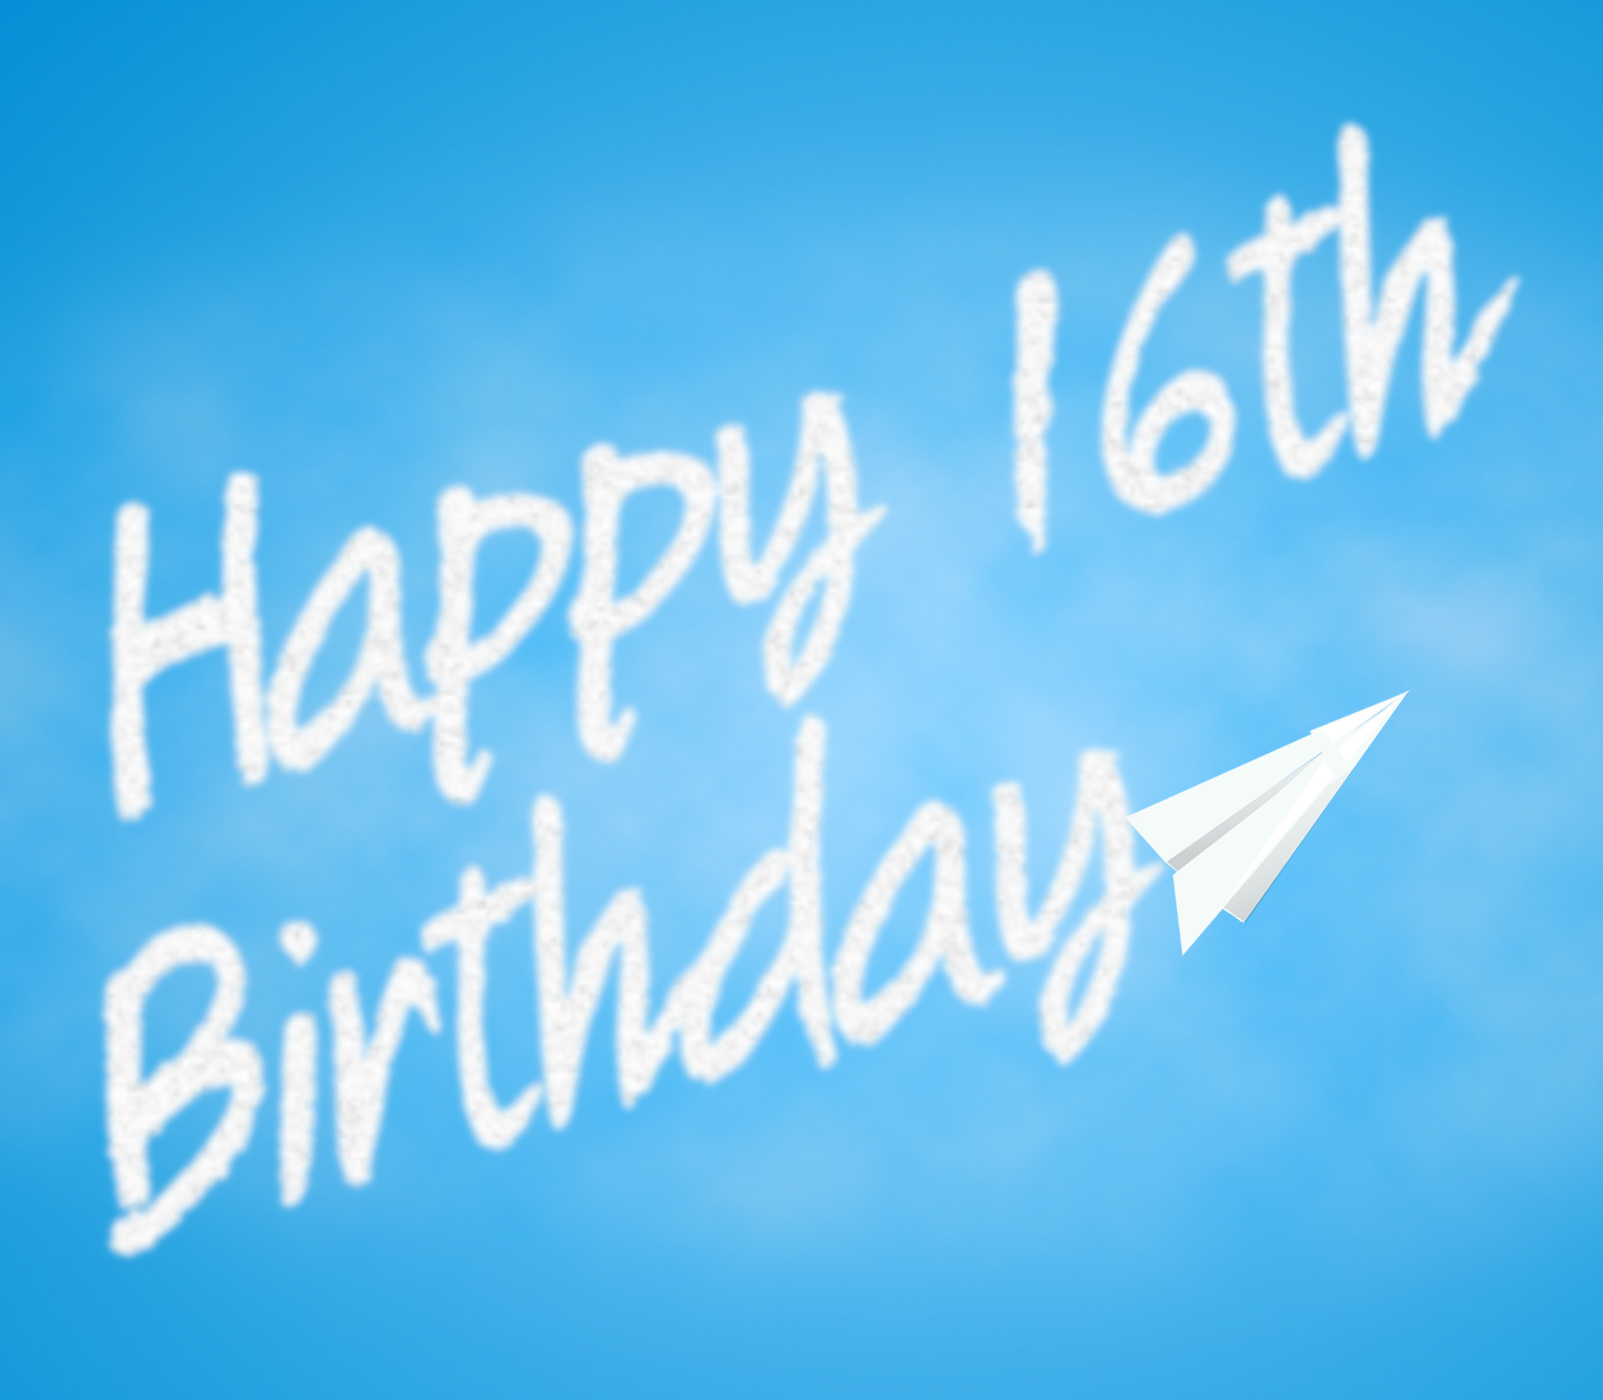 Happy sixteenth birthday means 16th greeting celebration photo